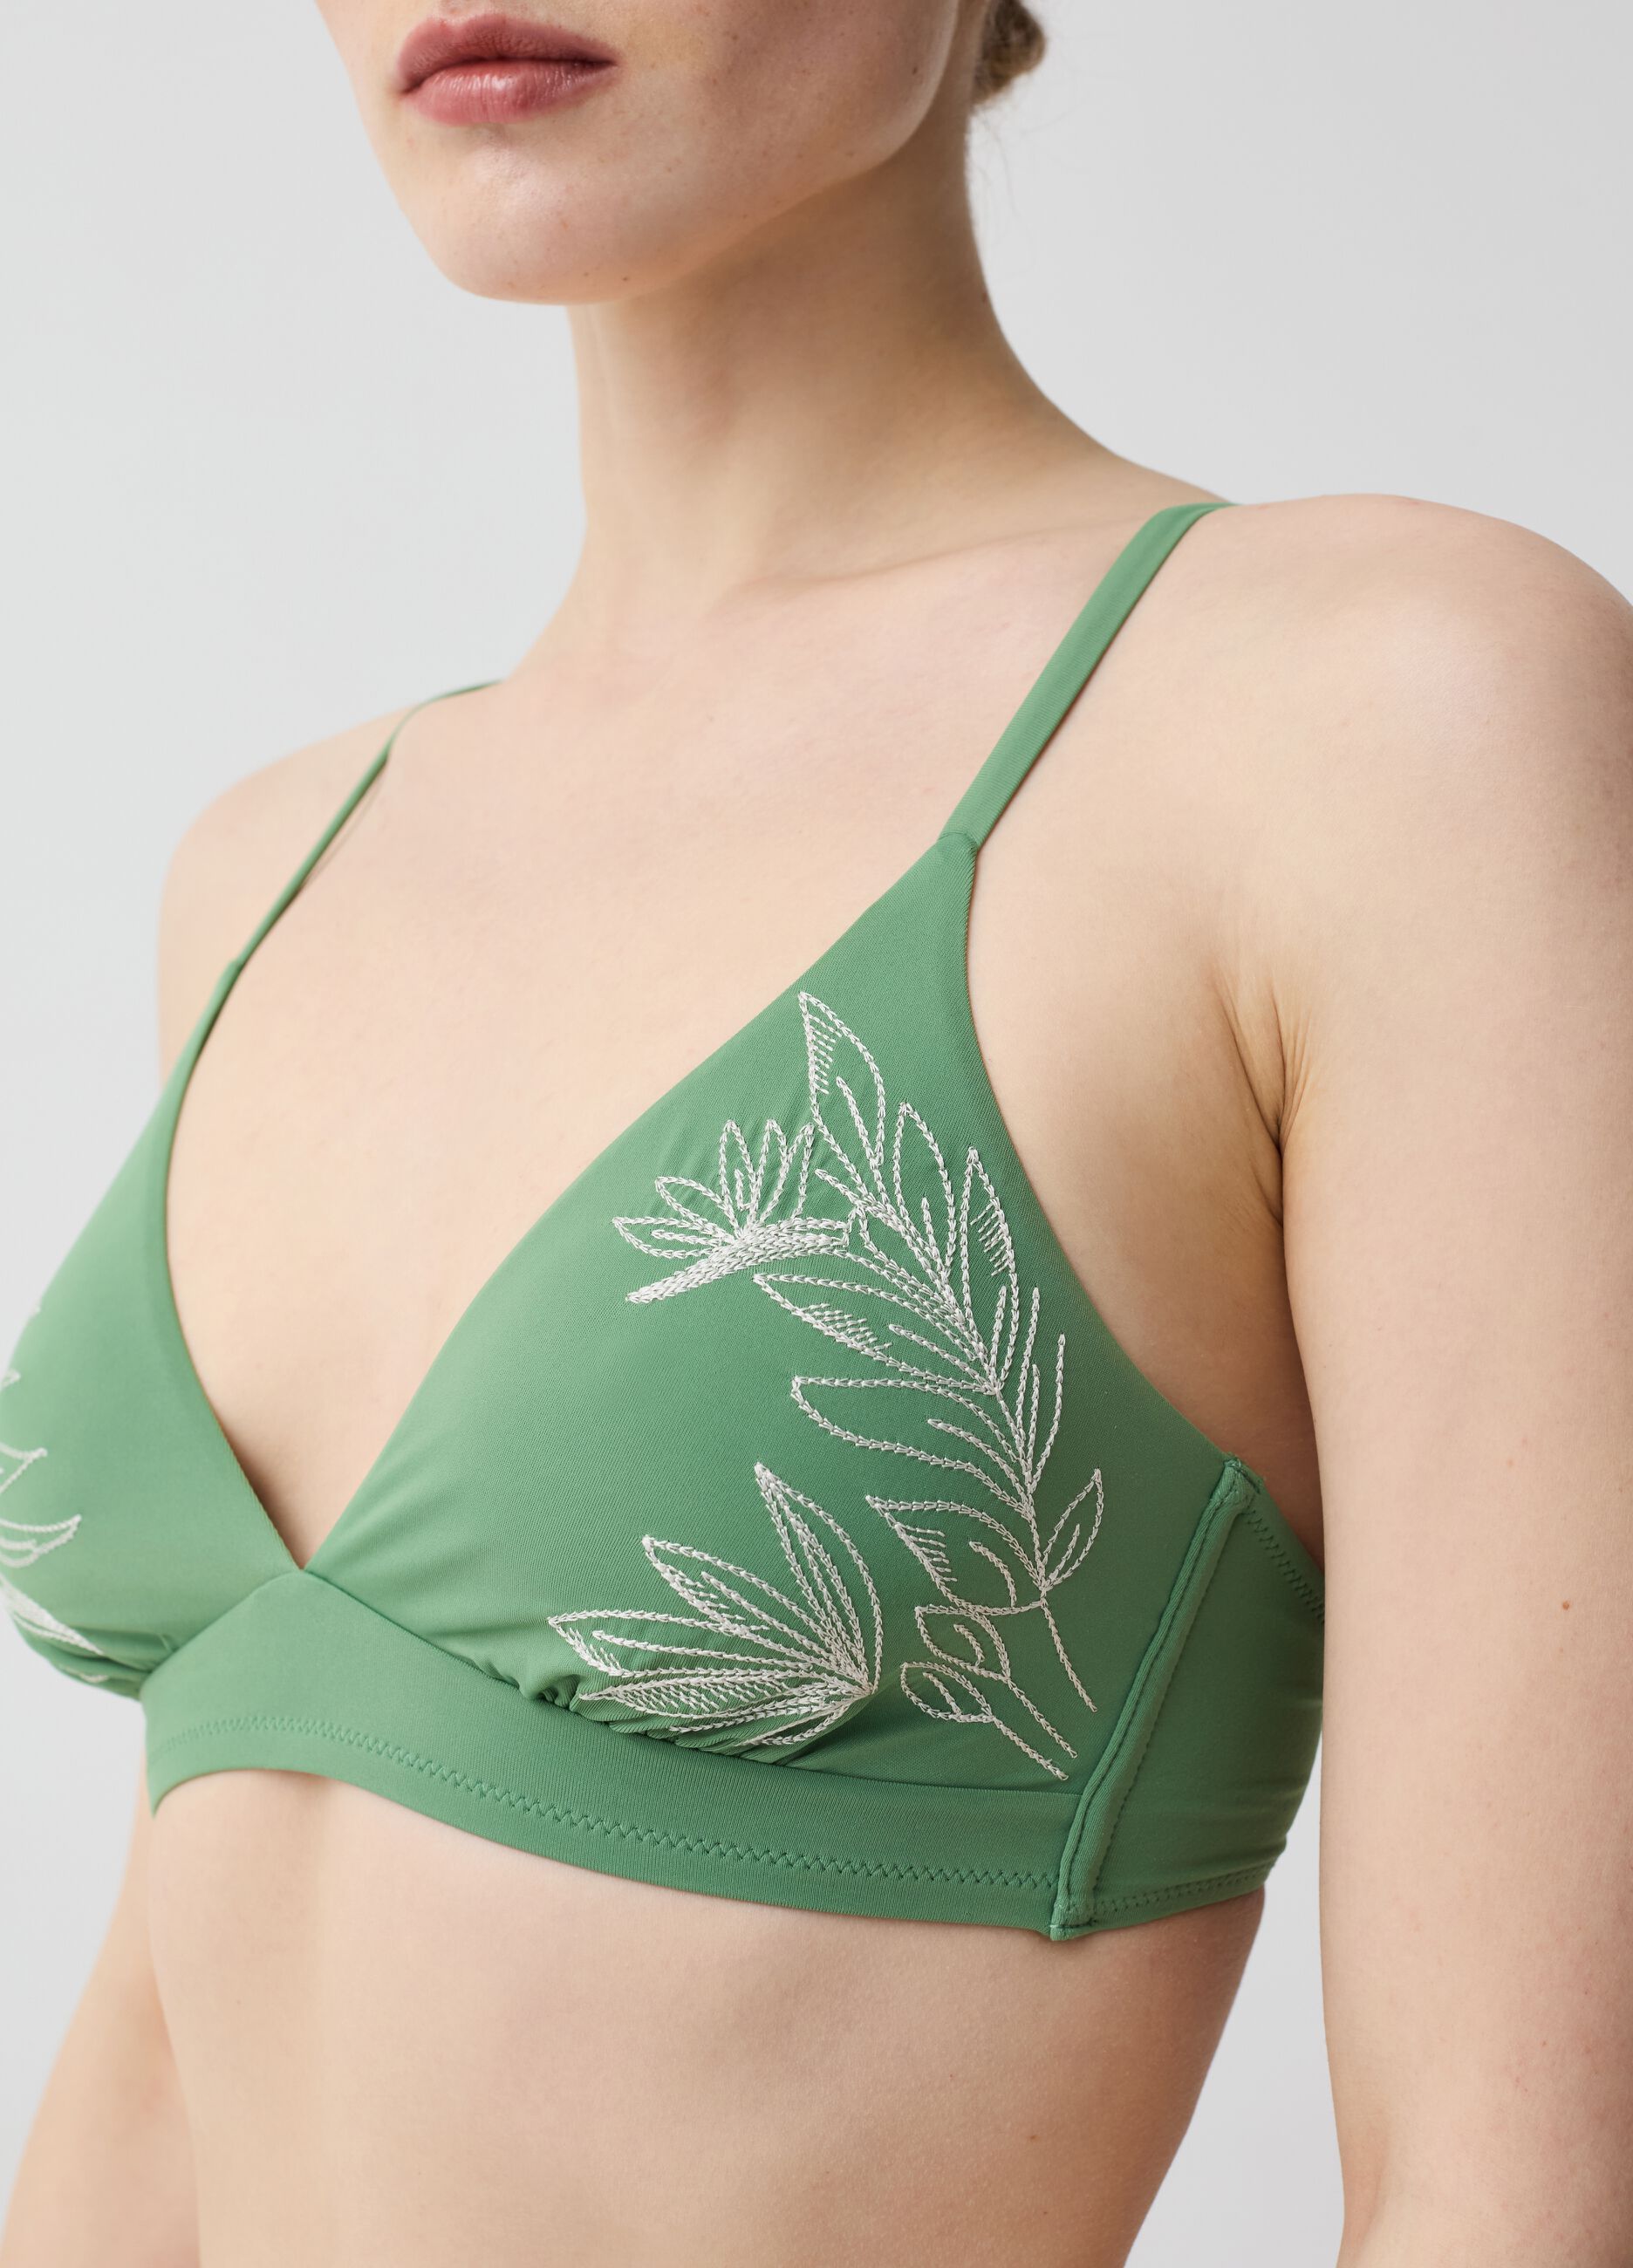 Bralette bikini top with foliage embroidery